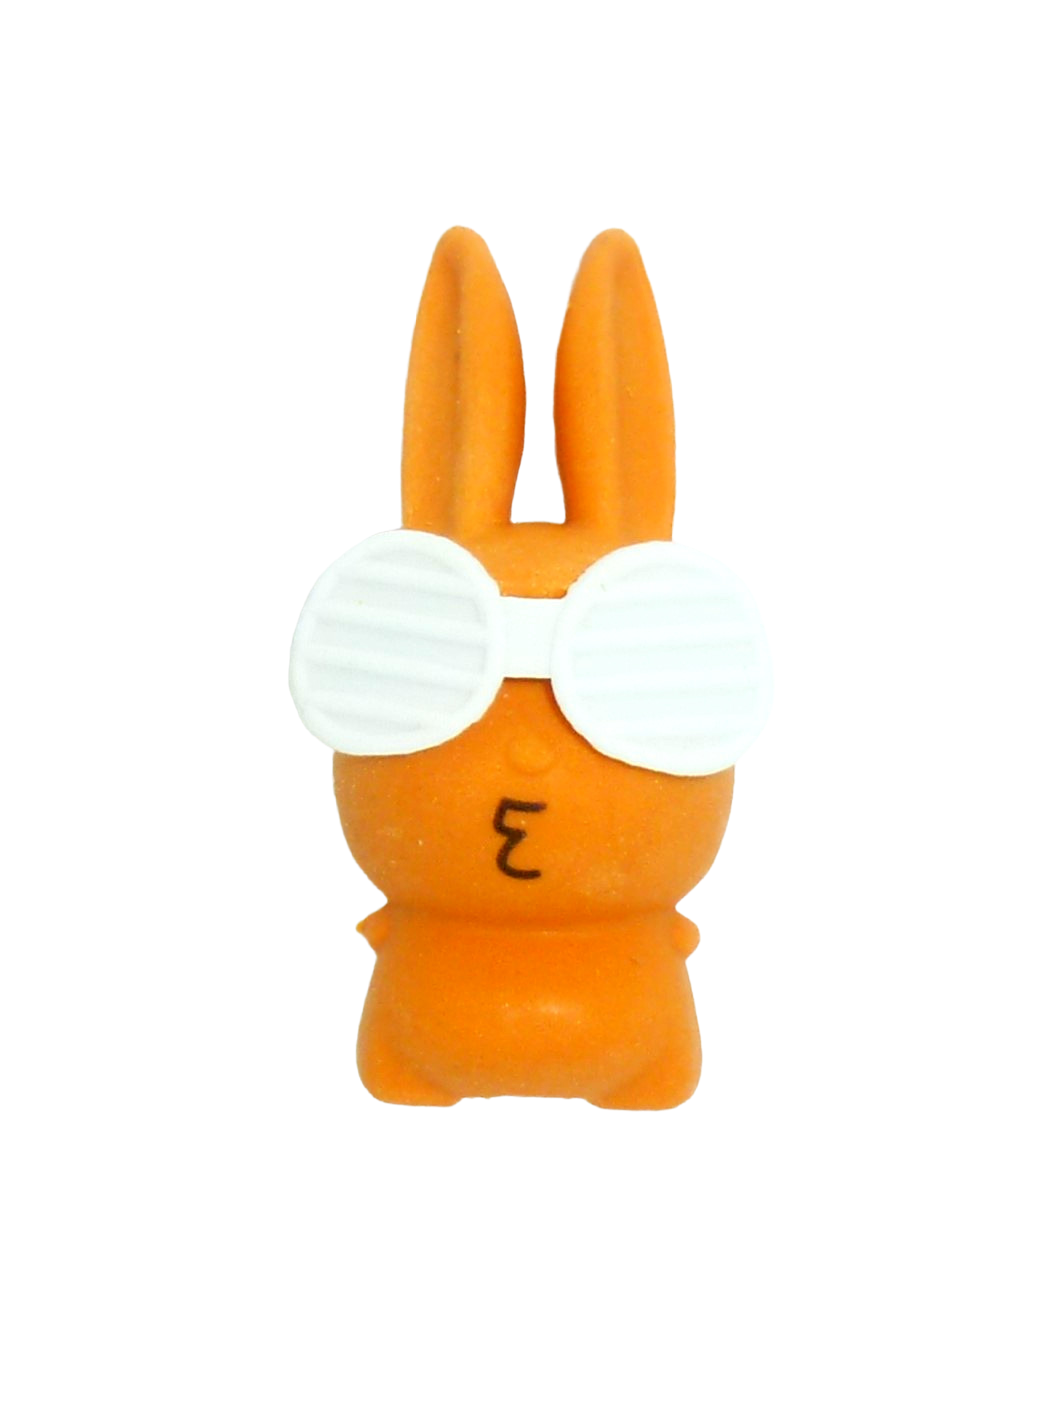 Orange bunny with sunglasses - eraser